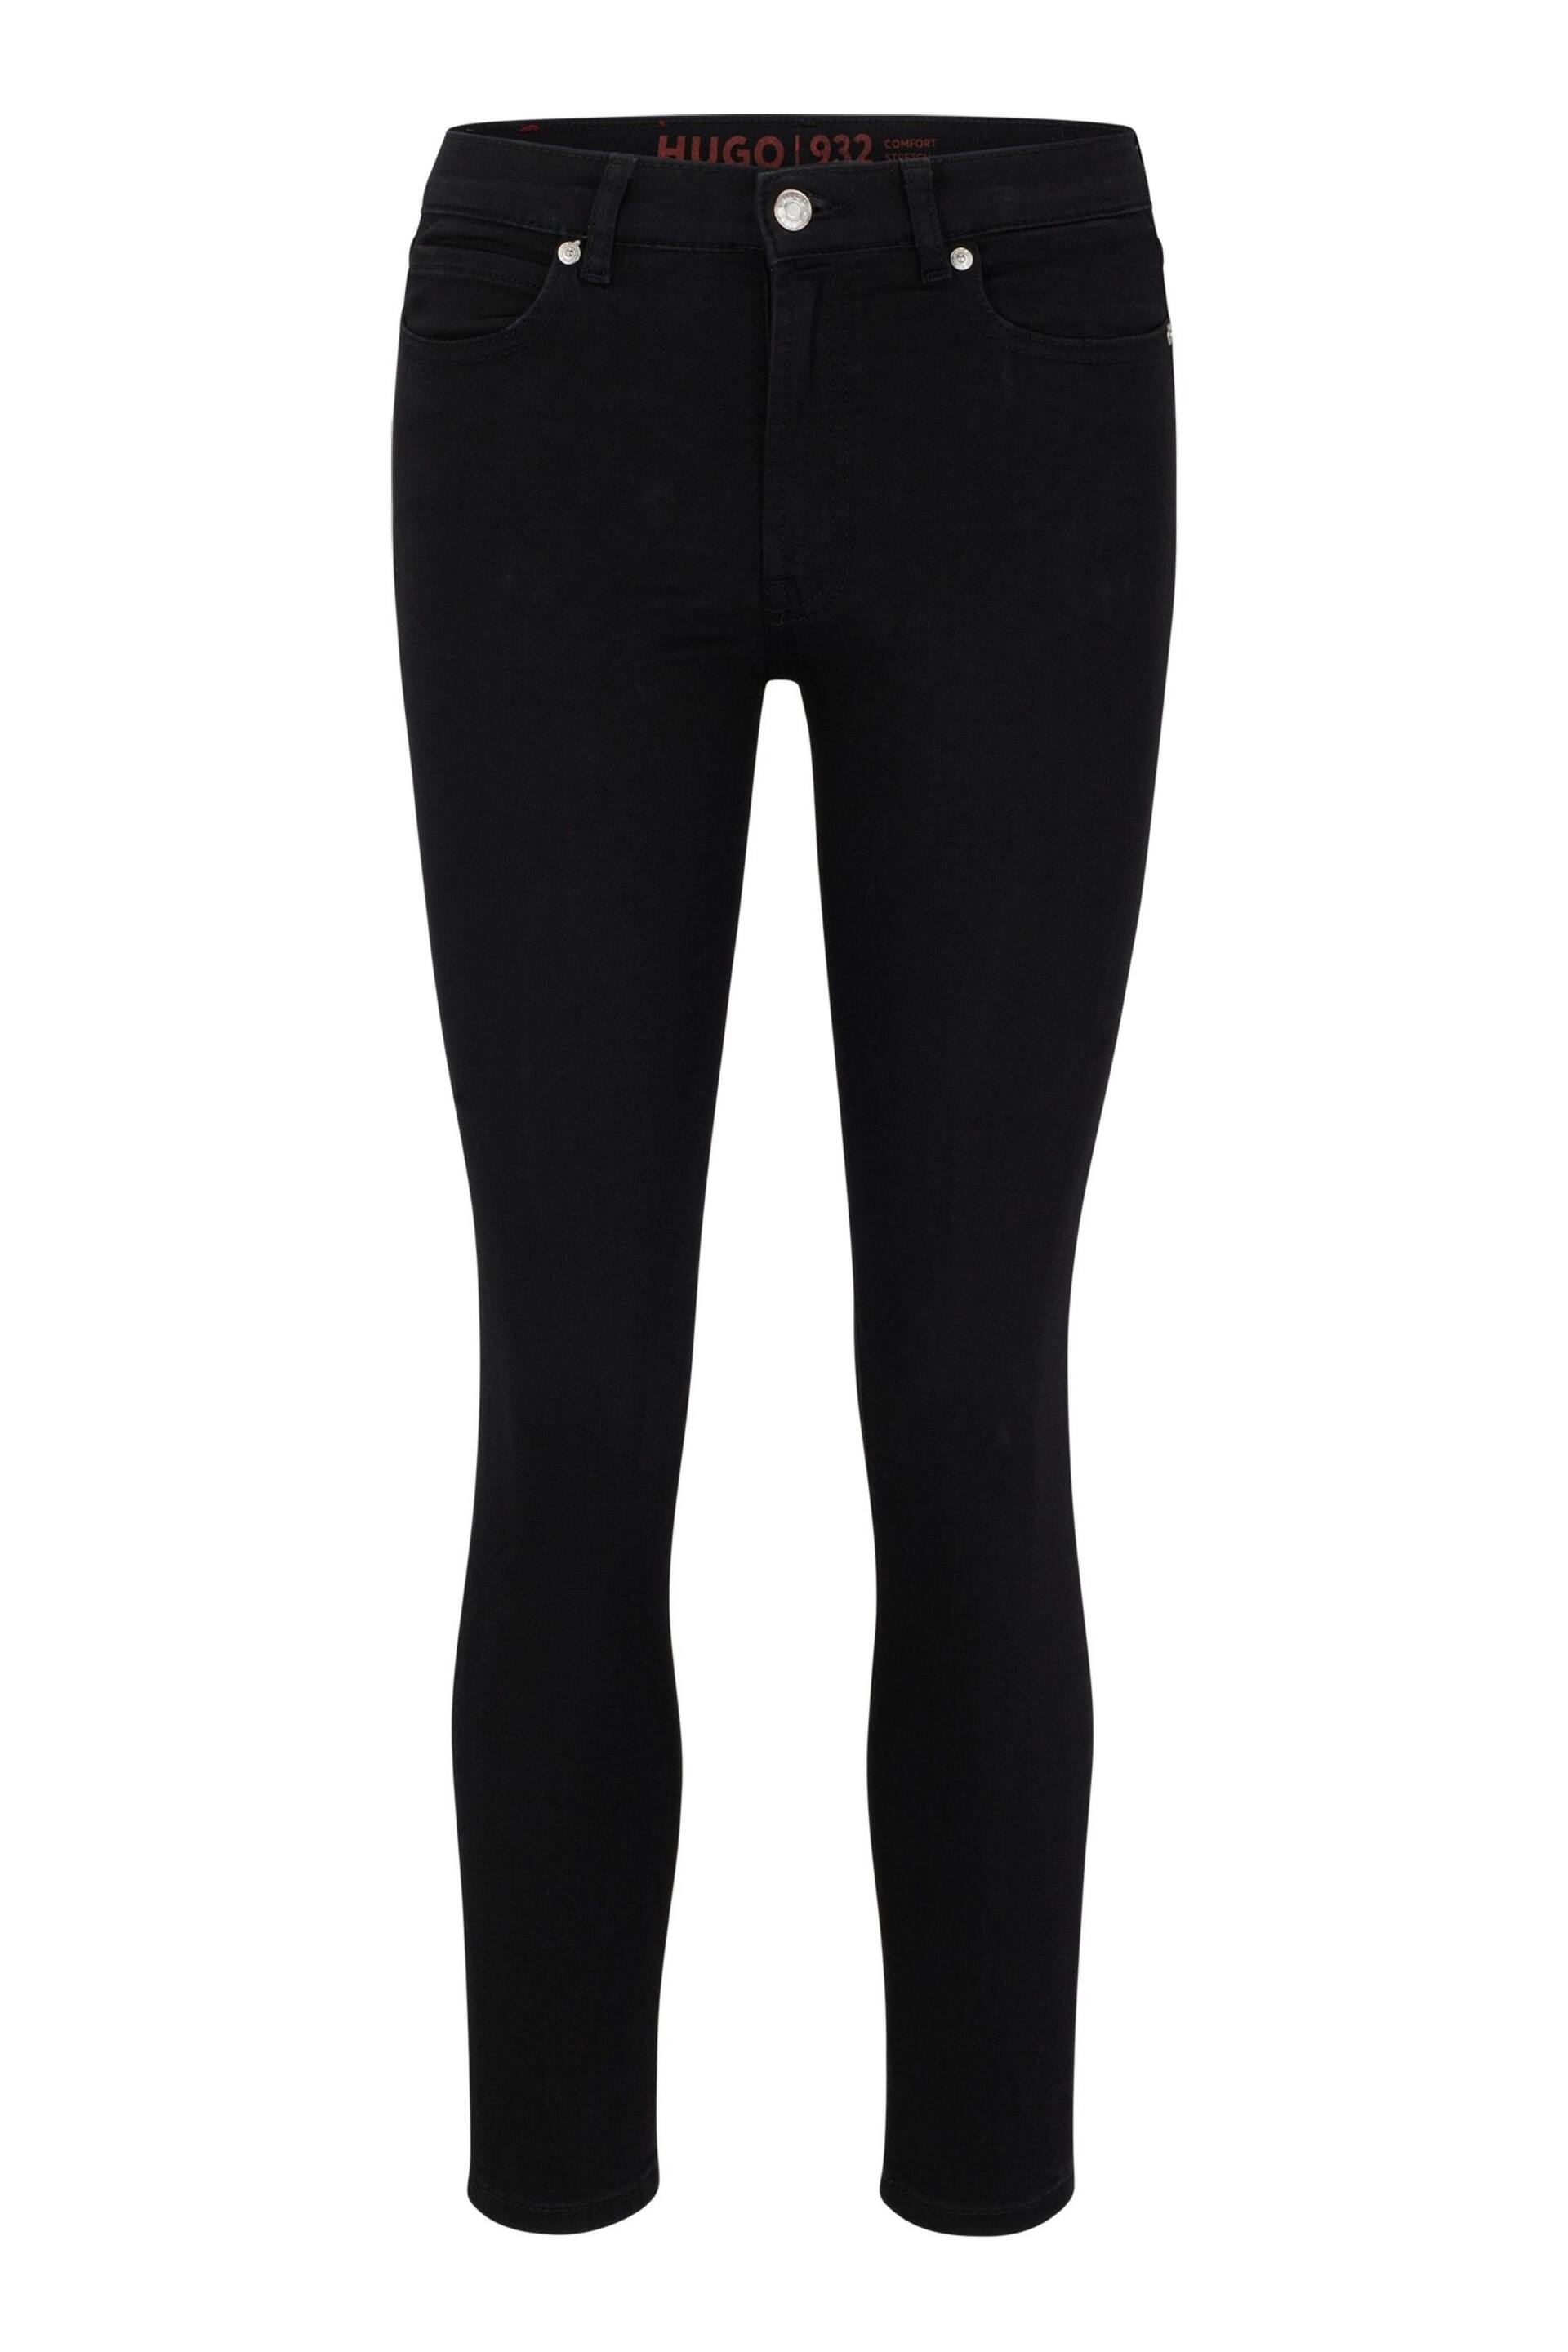 HUGO Black 932 Skinny Fit Stretch Jeans - Image 5 of 5